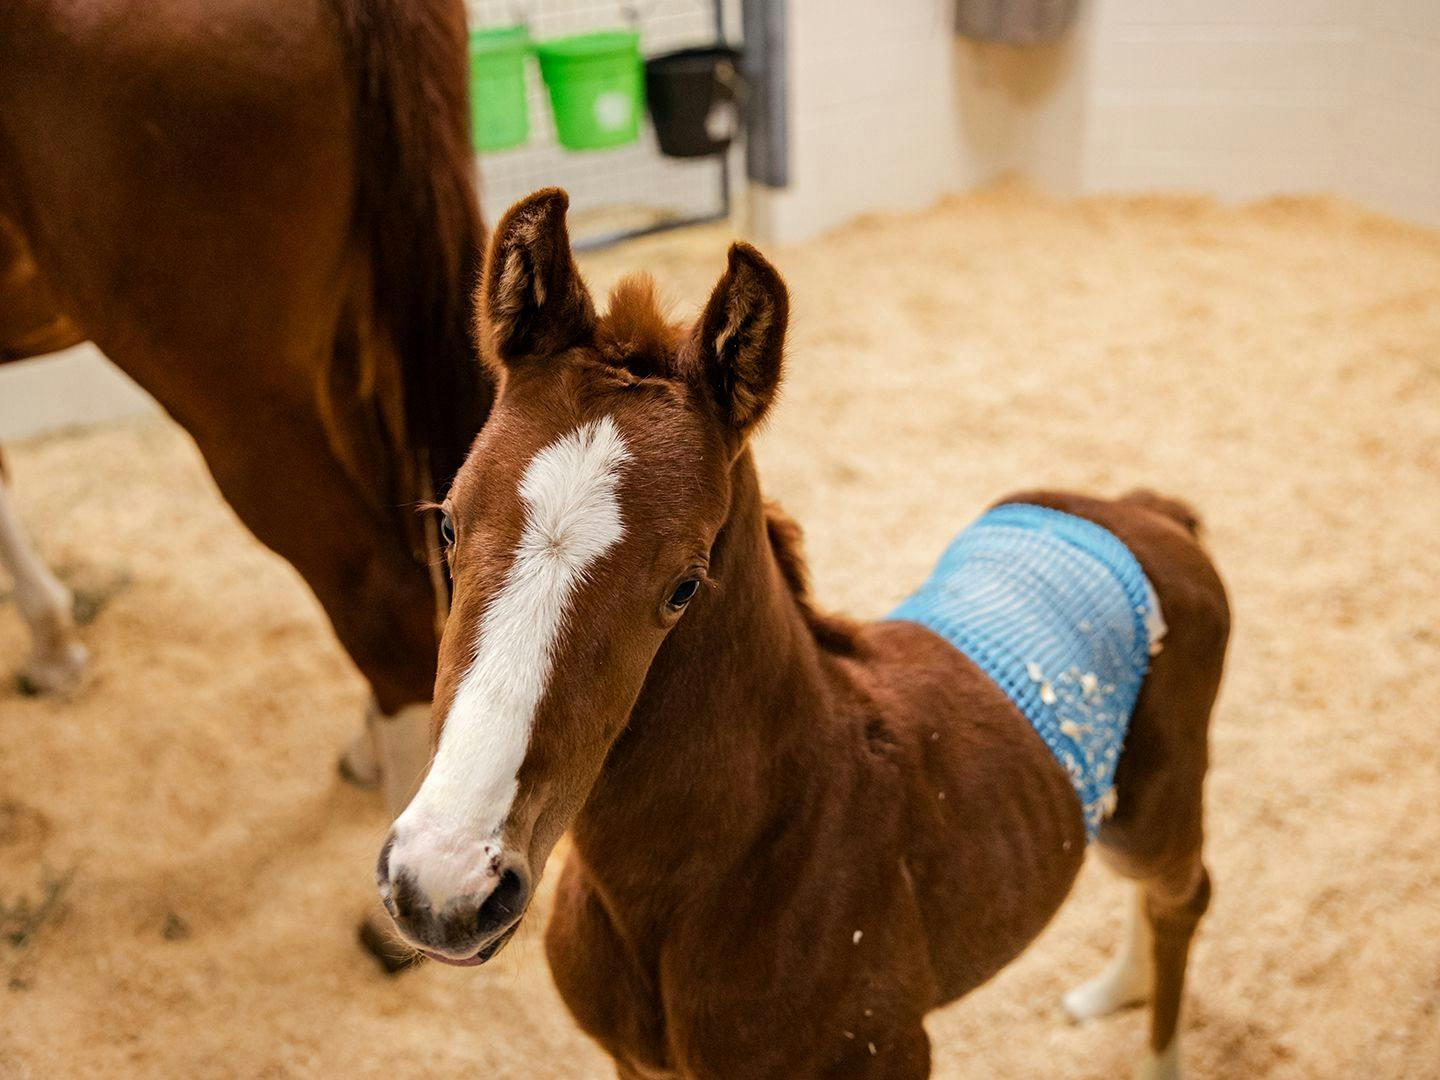 University veterinarians save newborn foal